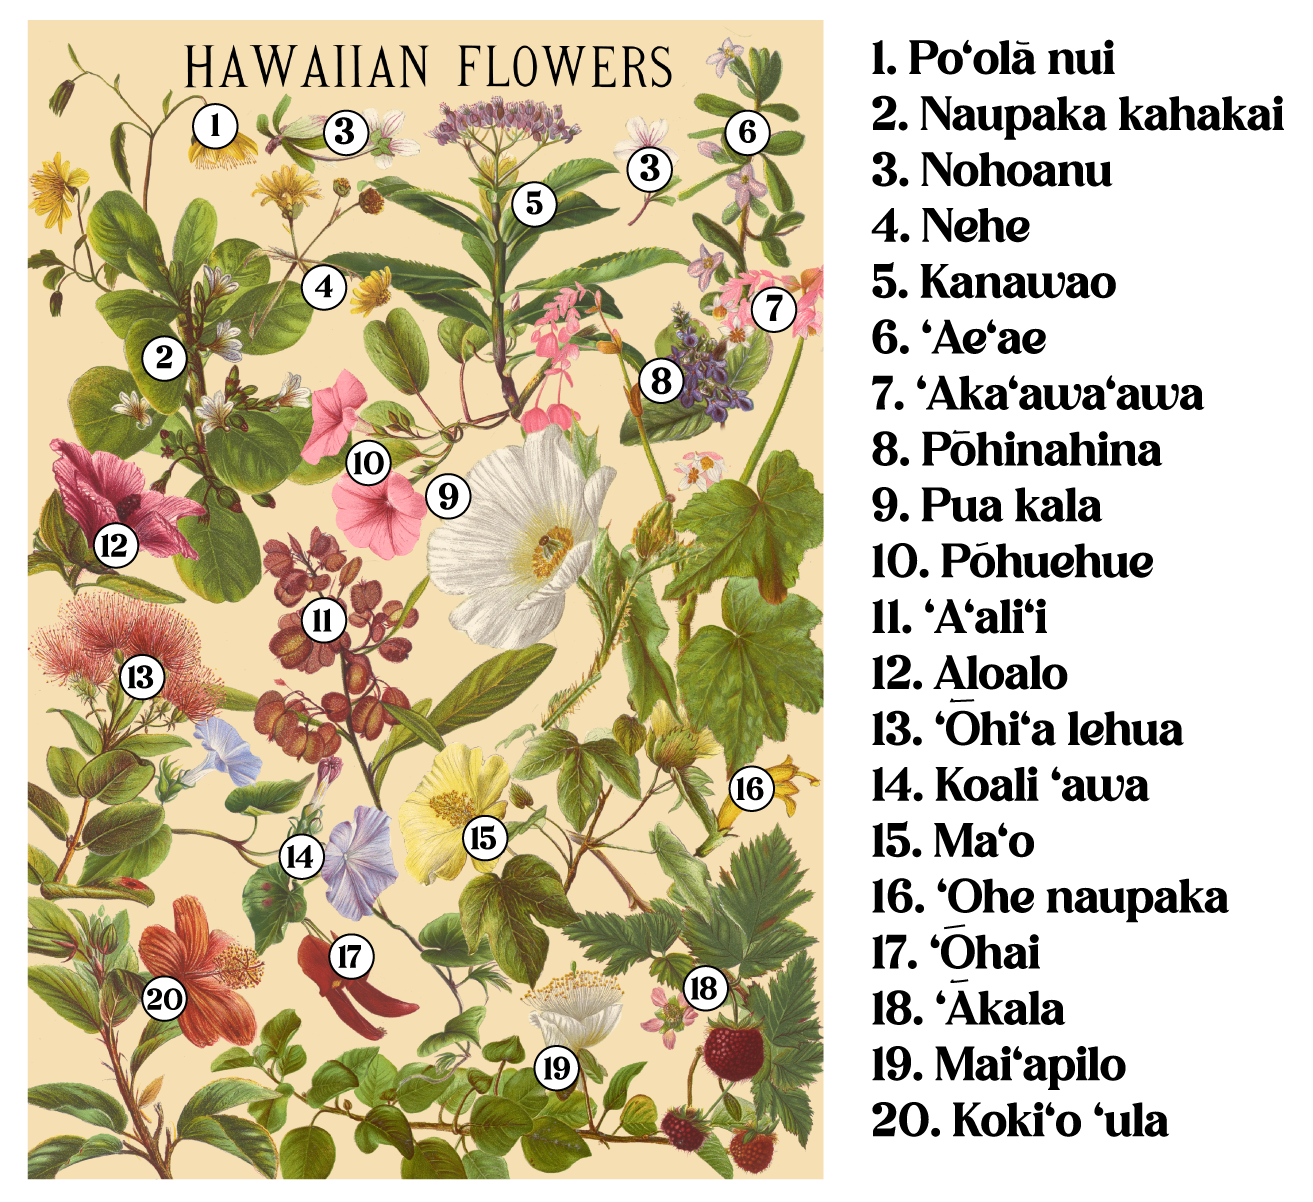 Hawaiian Flowers by Laulima Hawaiʻi - OUT OF STOCK